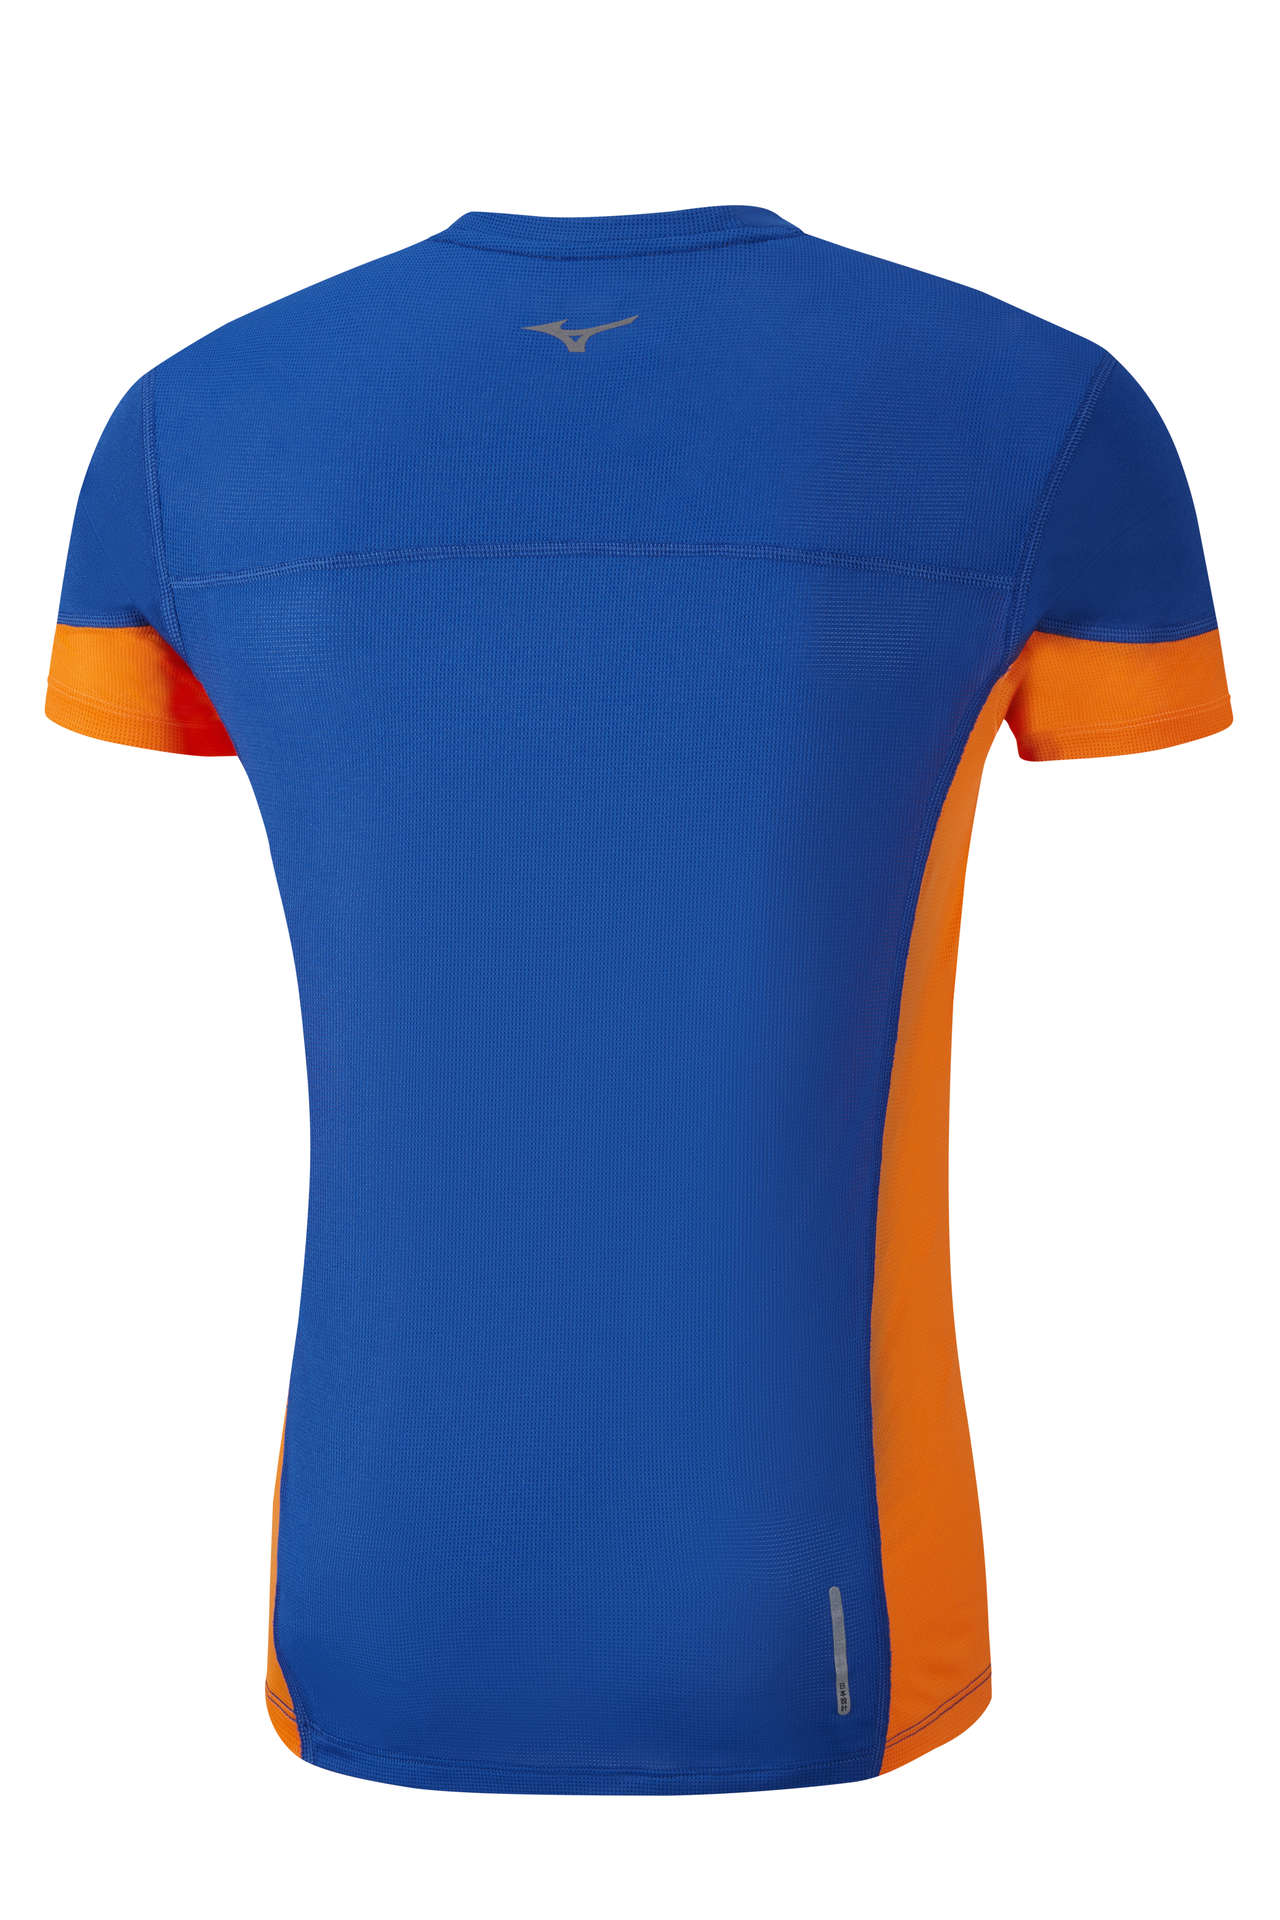 Mizuno Cooltouch V Hardloopshirt Korte Mouwen Blauw/Oranje Heren